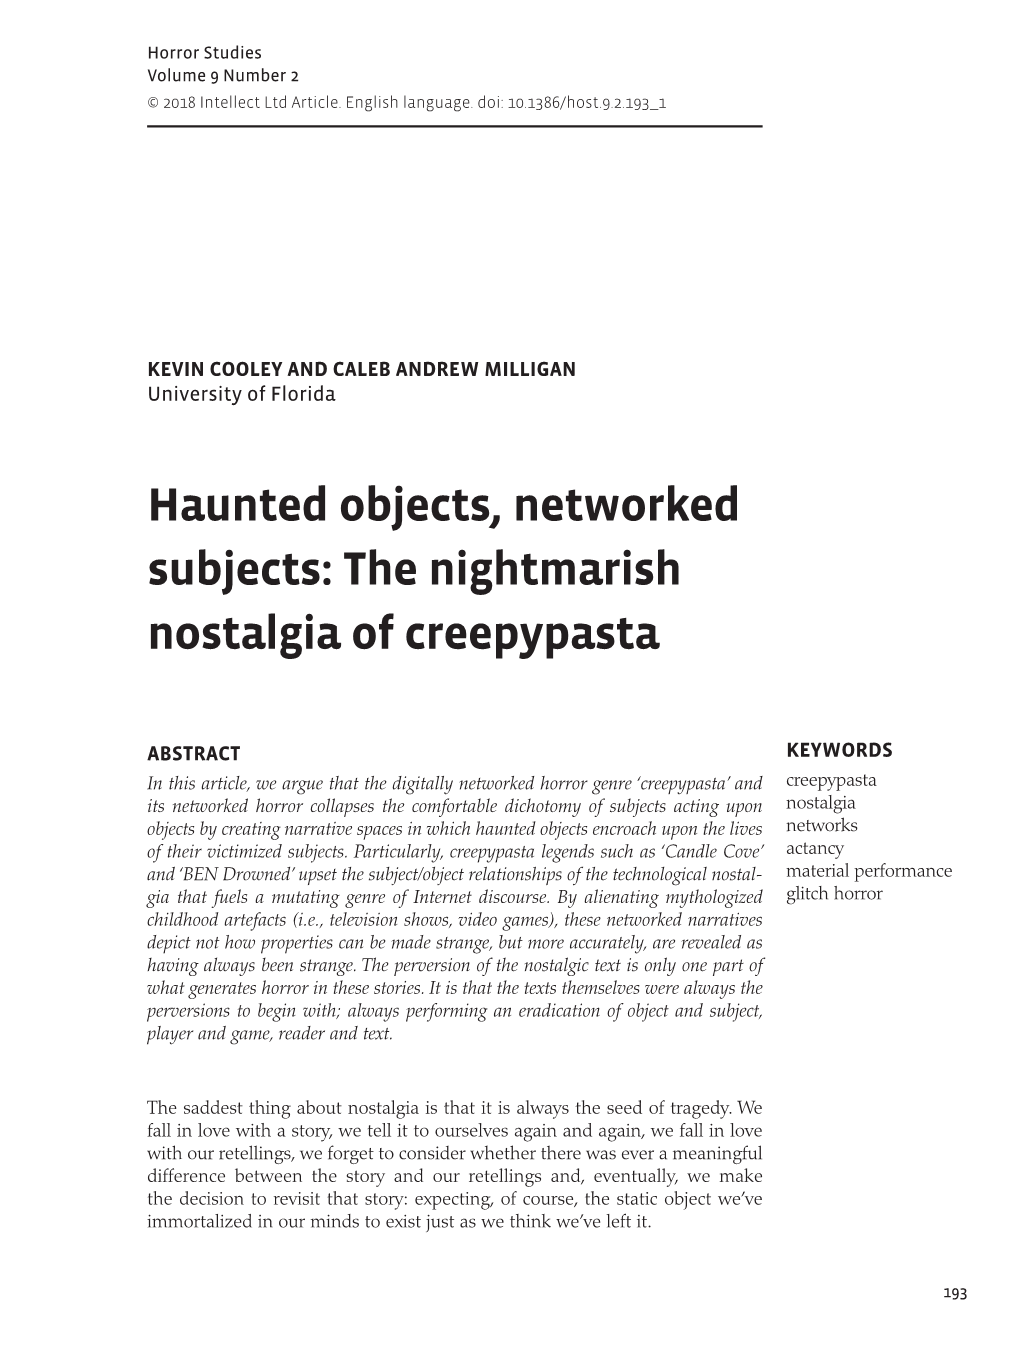 Haunted Objects, Networked Subjects: the Nightmarish Nostalgia of Creepypasta